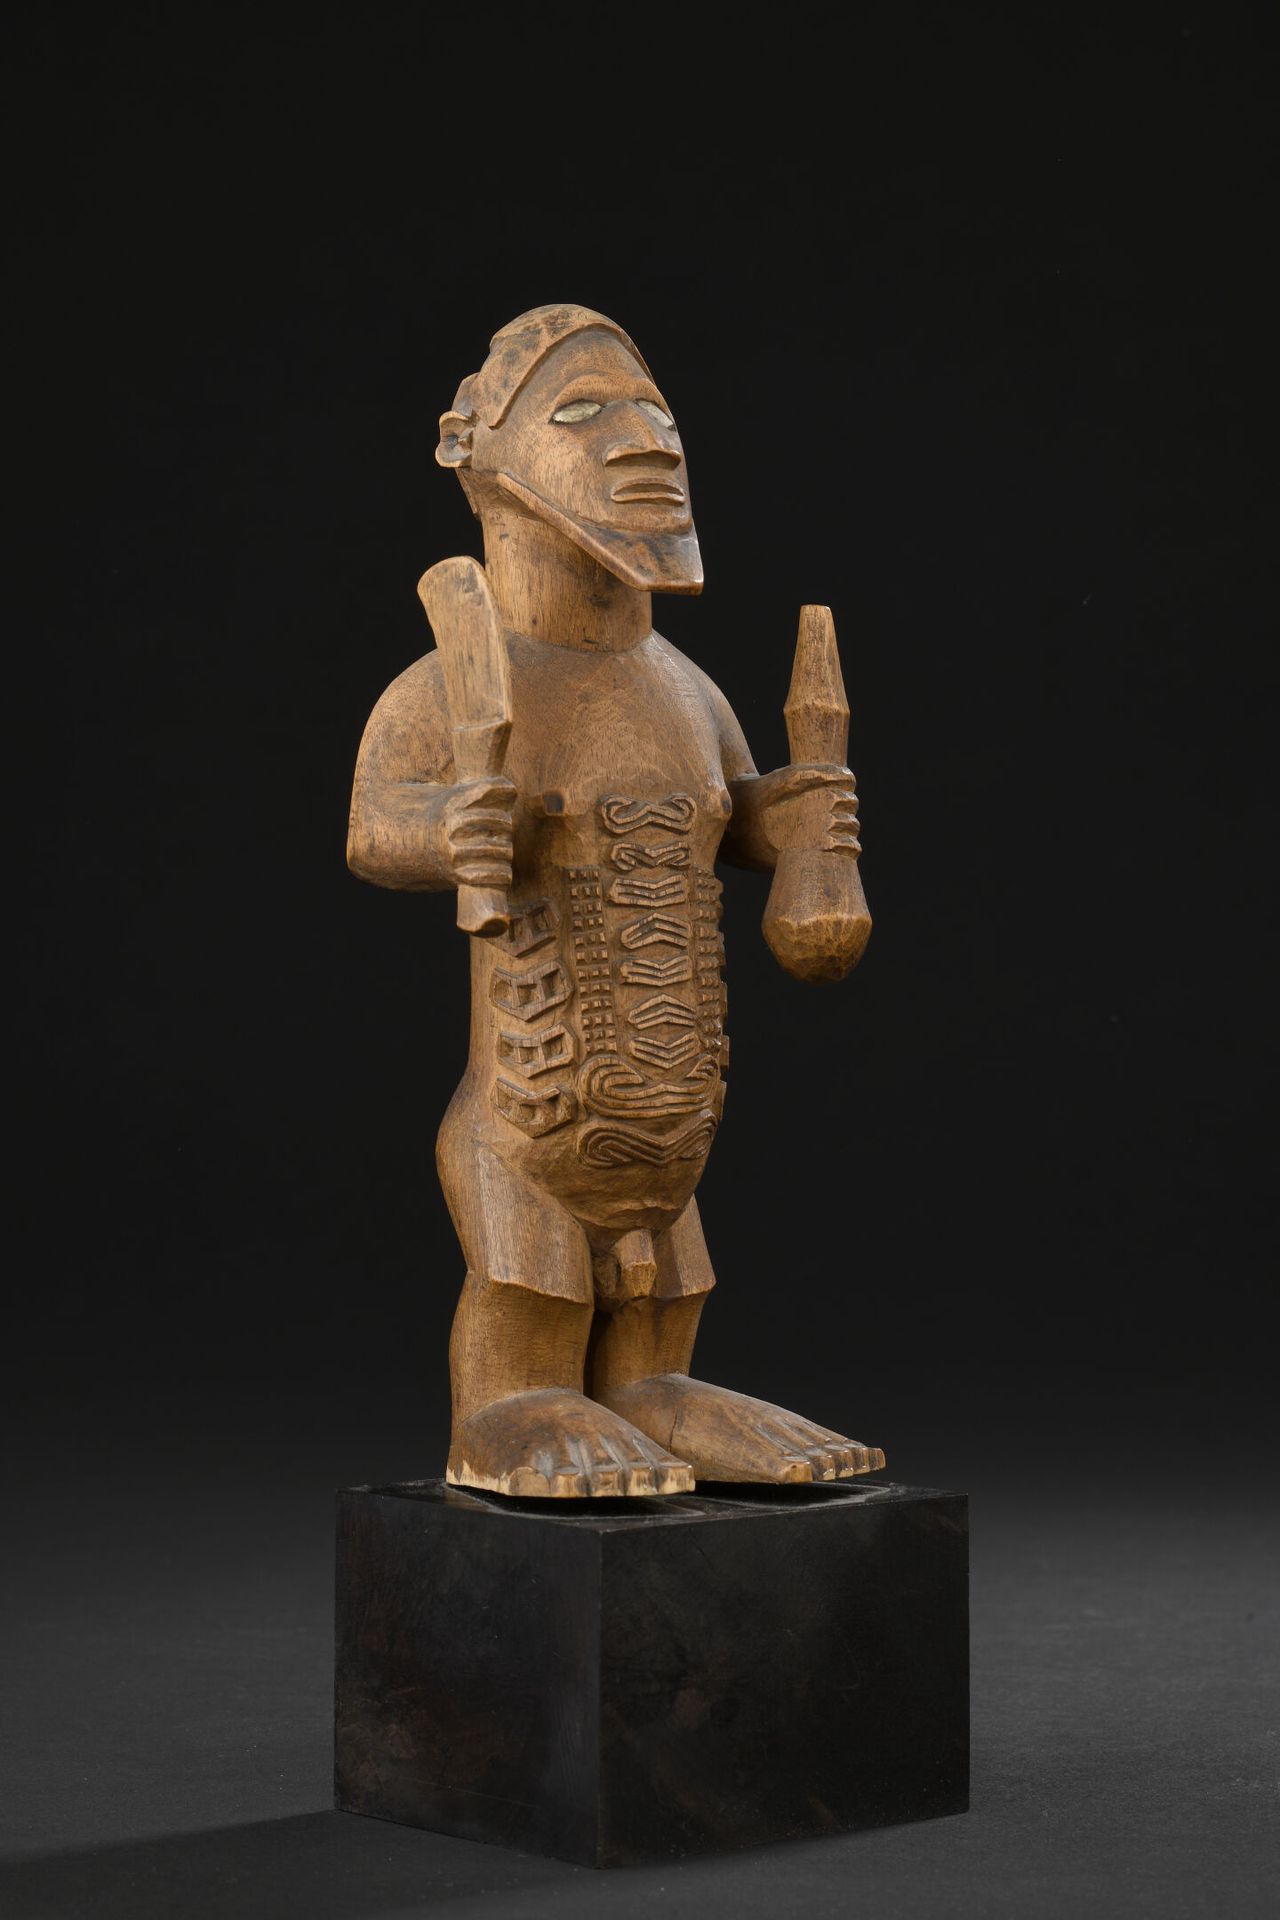 Null *Statuette, Bembe, 刚果民主共和国 
木材，陶器
H.18.5厘米 

出处。 
瑞士私人收藏

象征性的姿势，身体直立，抬头挺胸，&hellip;